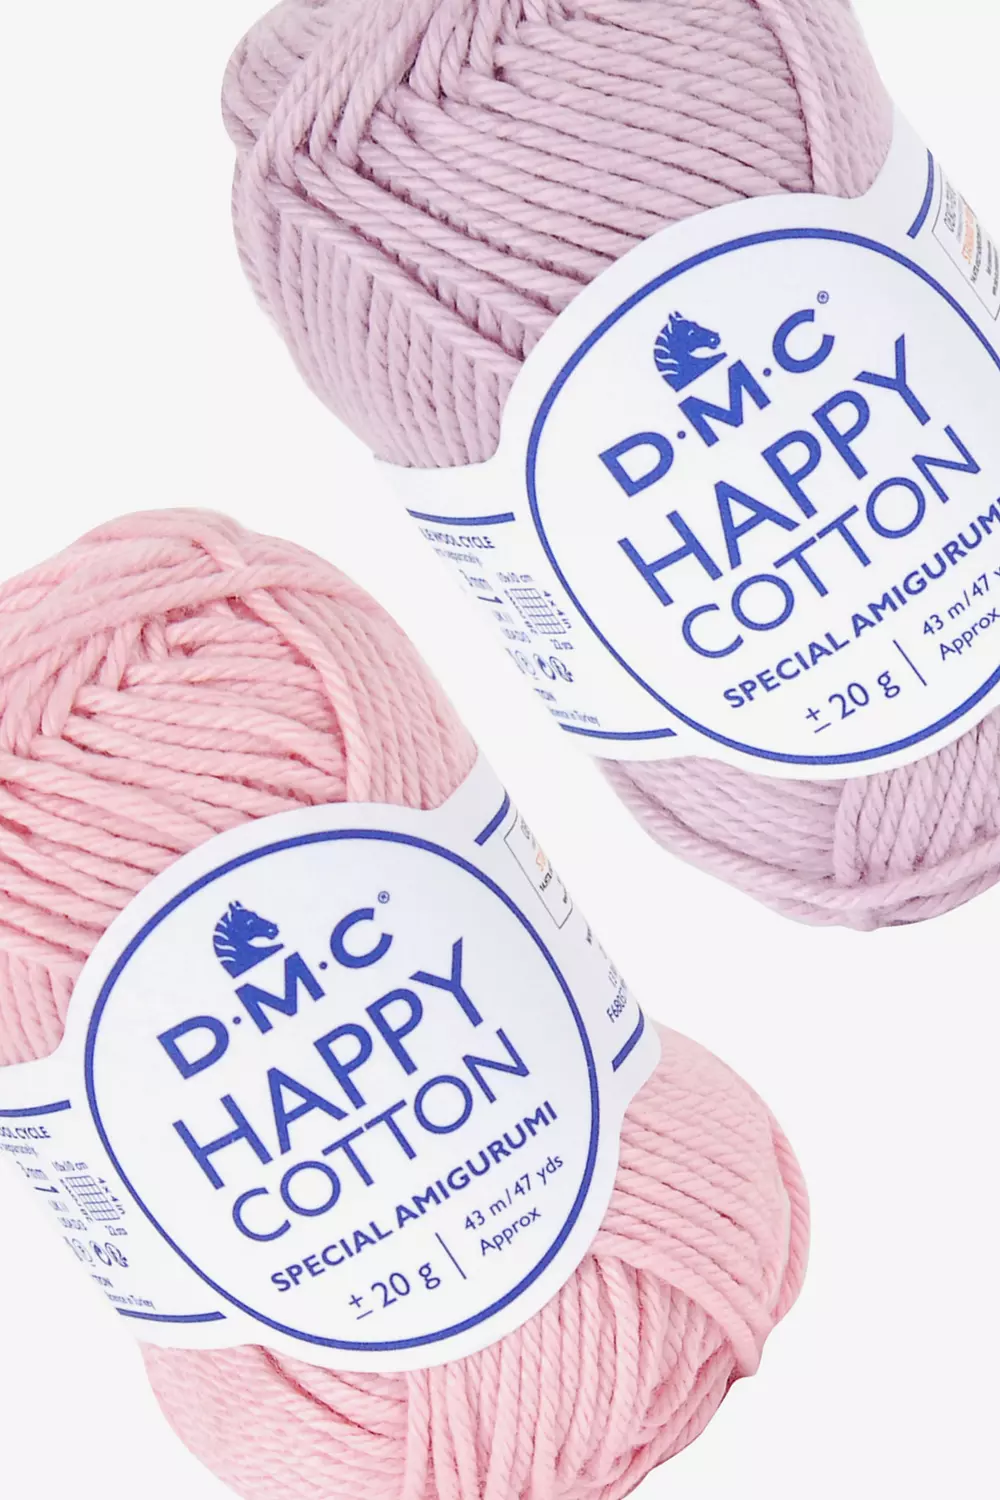 Happy Cotton - DMC